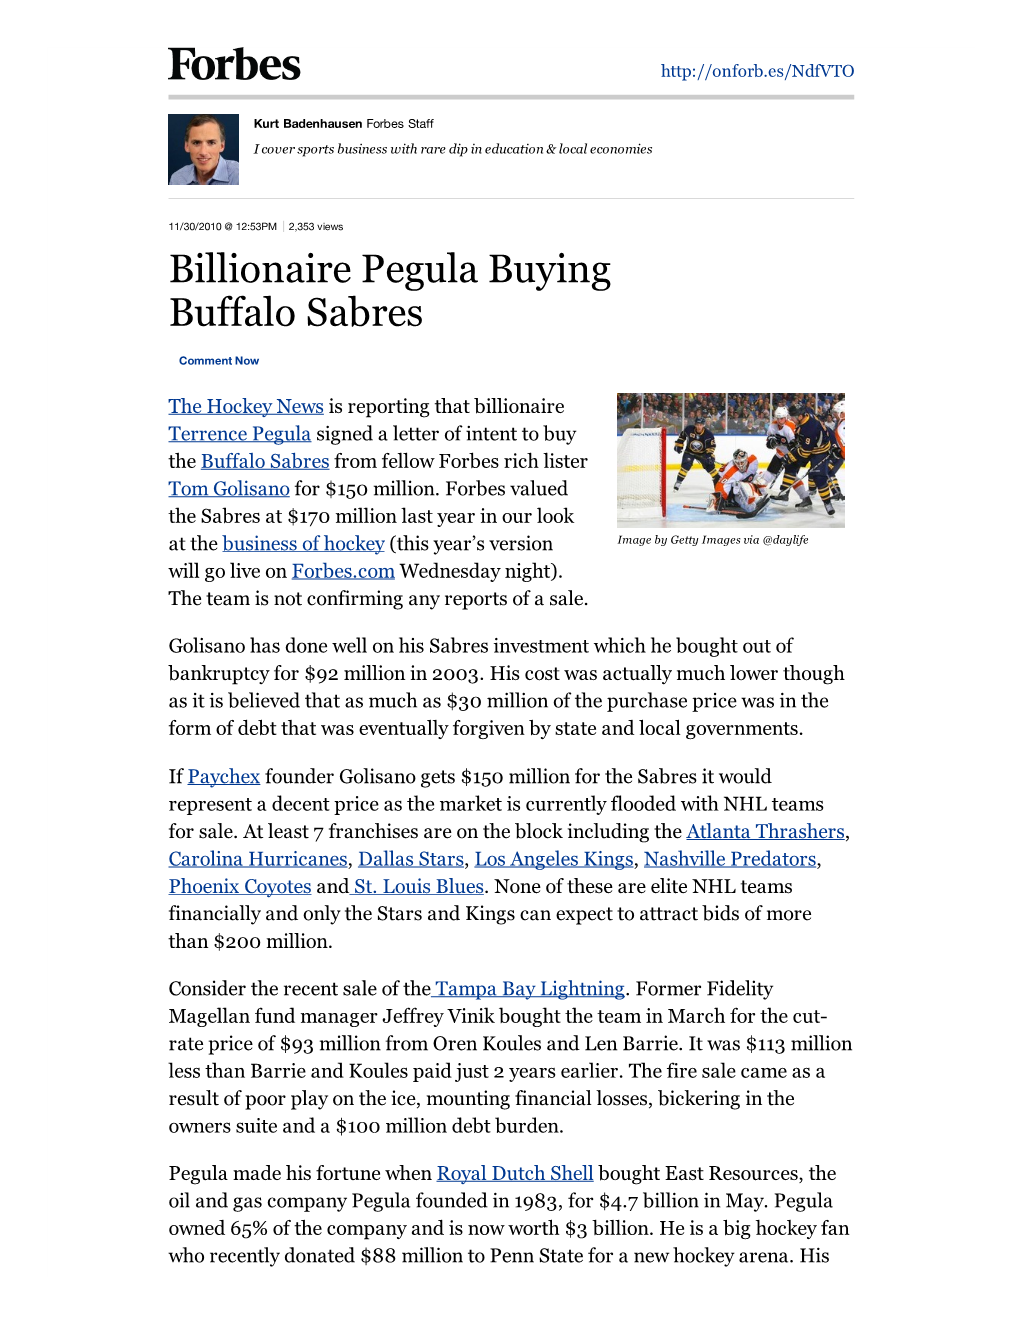 Billionaire Pegula Buying Buffalo Sabres